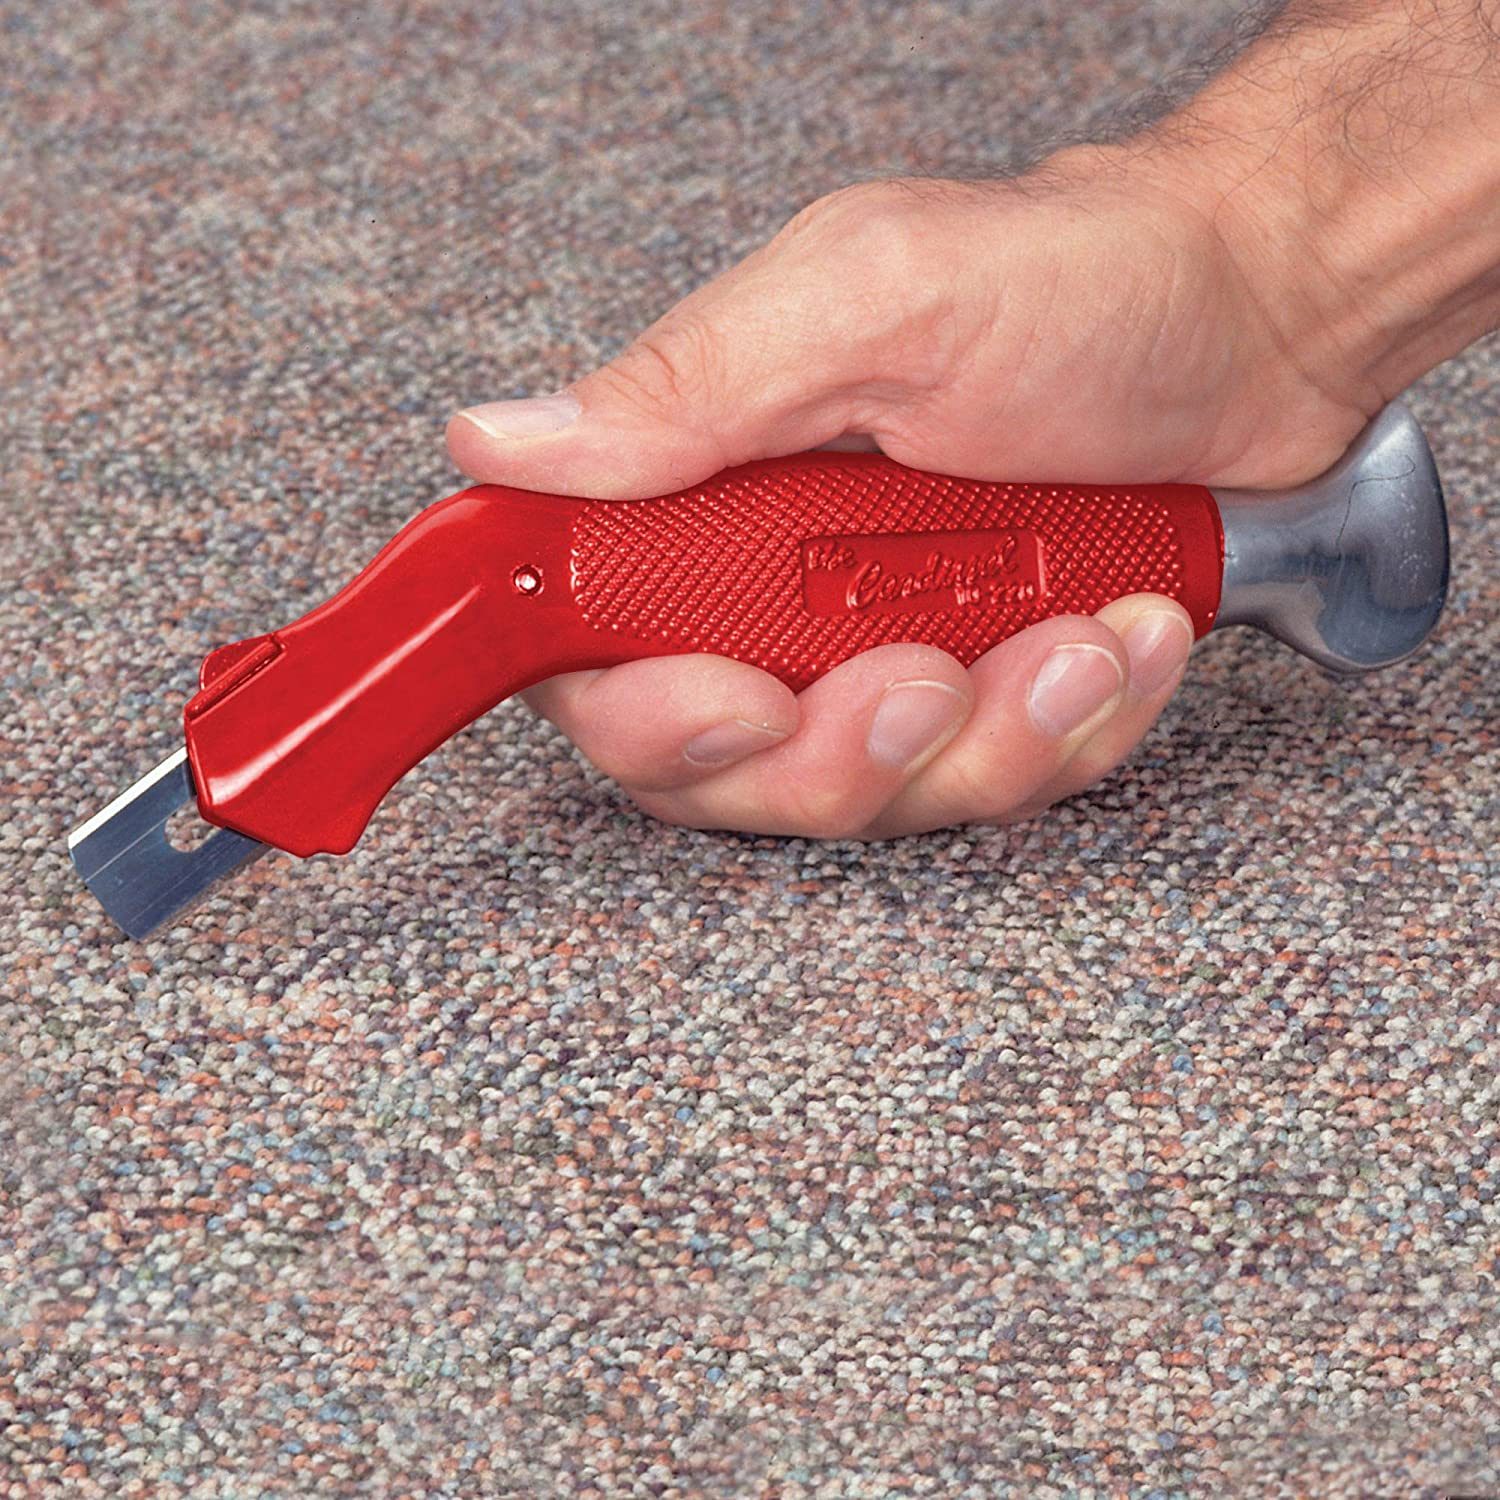 How Do You Use a Carpet Cutter Knife? Carpet Cutter Knife Guide 2023